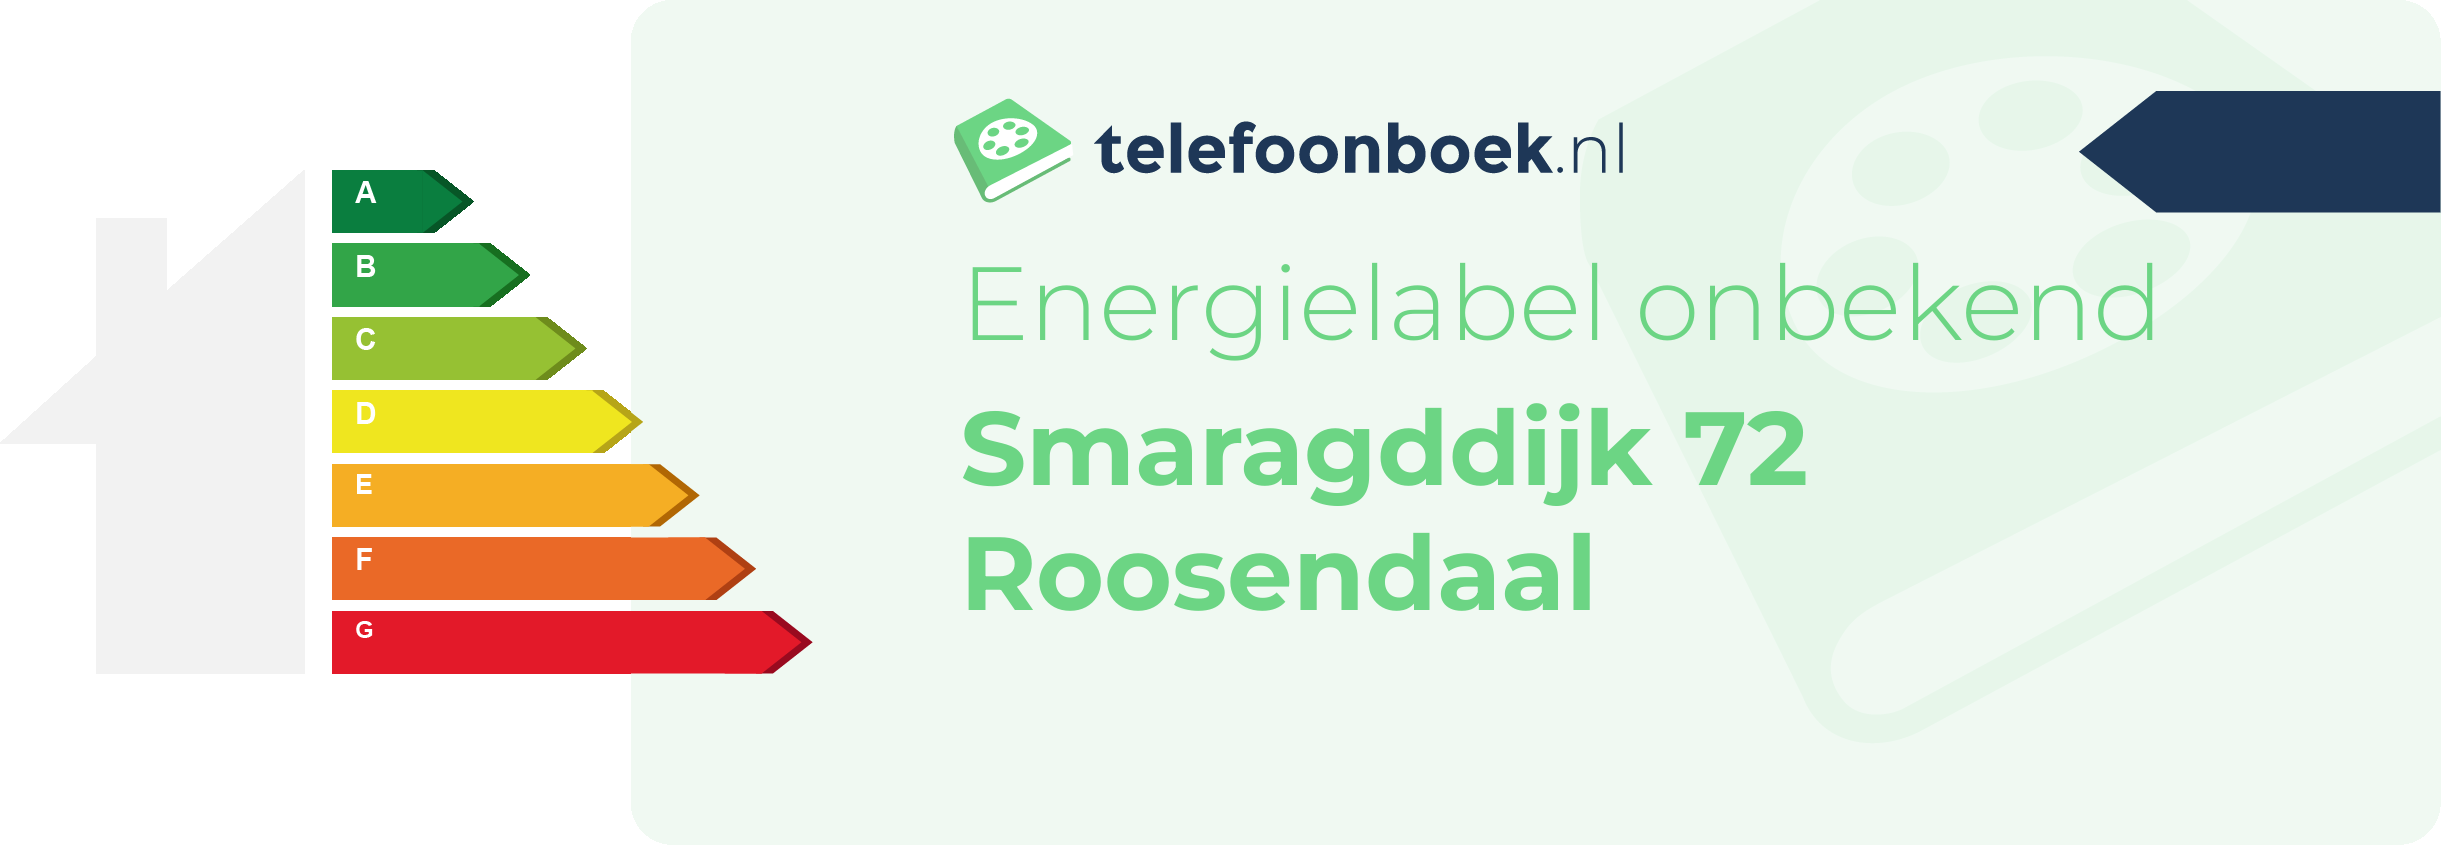 Energielabel Smaragddijk 72 Roosendaal